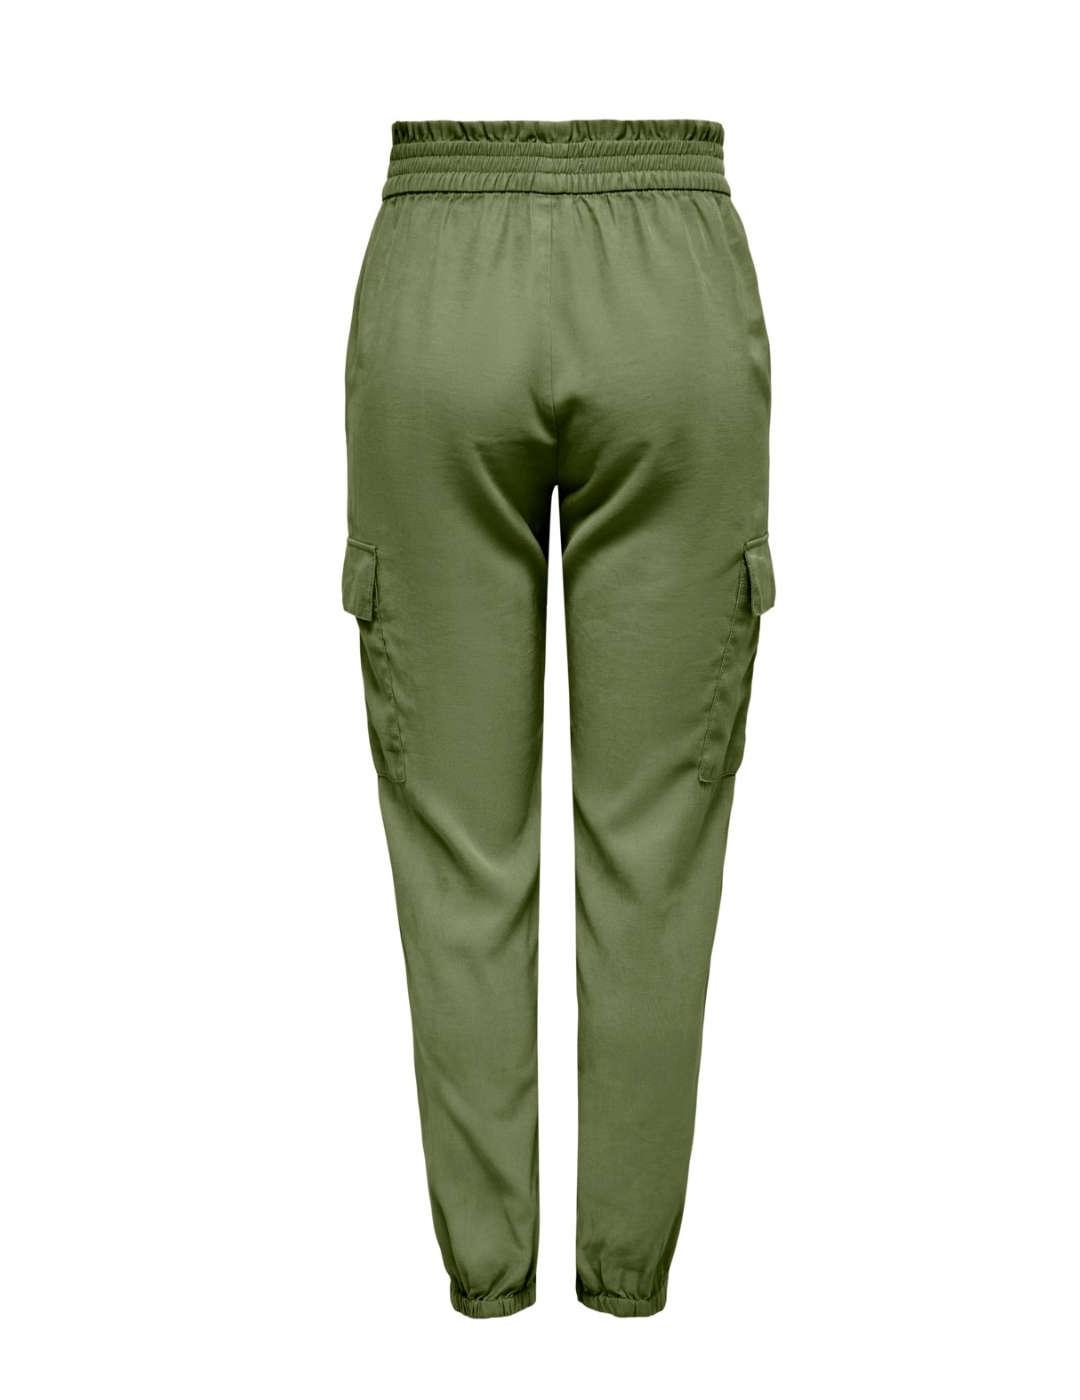 Pantalón Only Ocean cargo verde con puño ajustado para mujer